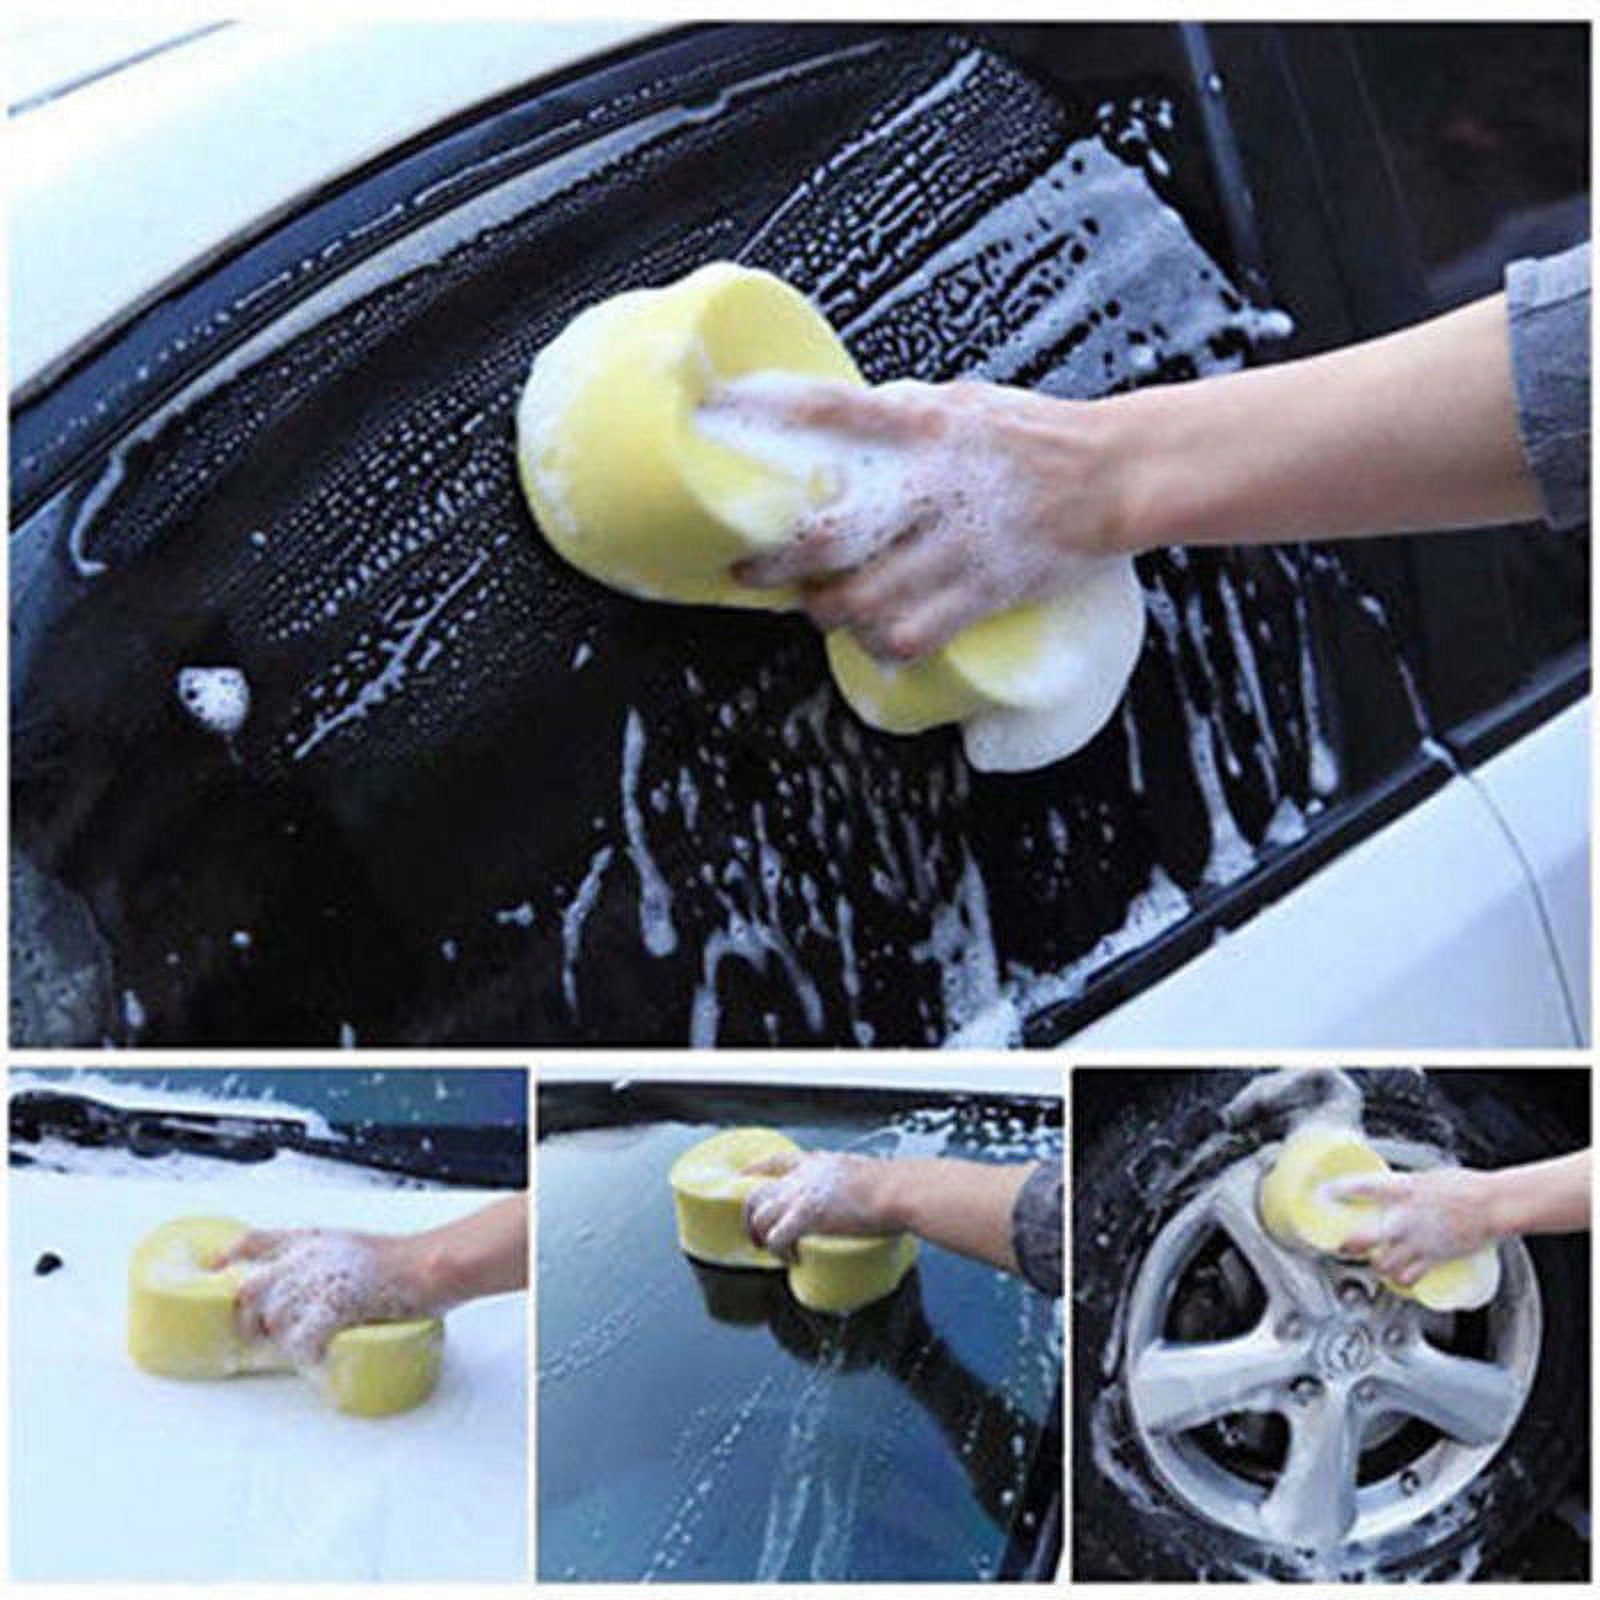 Car Set Wash Sponge Car Cleaning Care Tools Yellow Sponges Car Wax  Polishing Washing Tools H SqcMrb From Sportop_company, $0.19